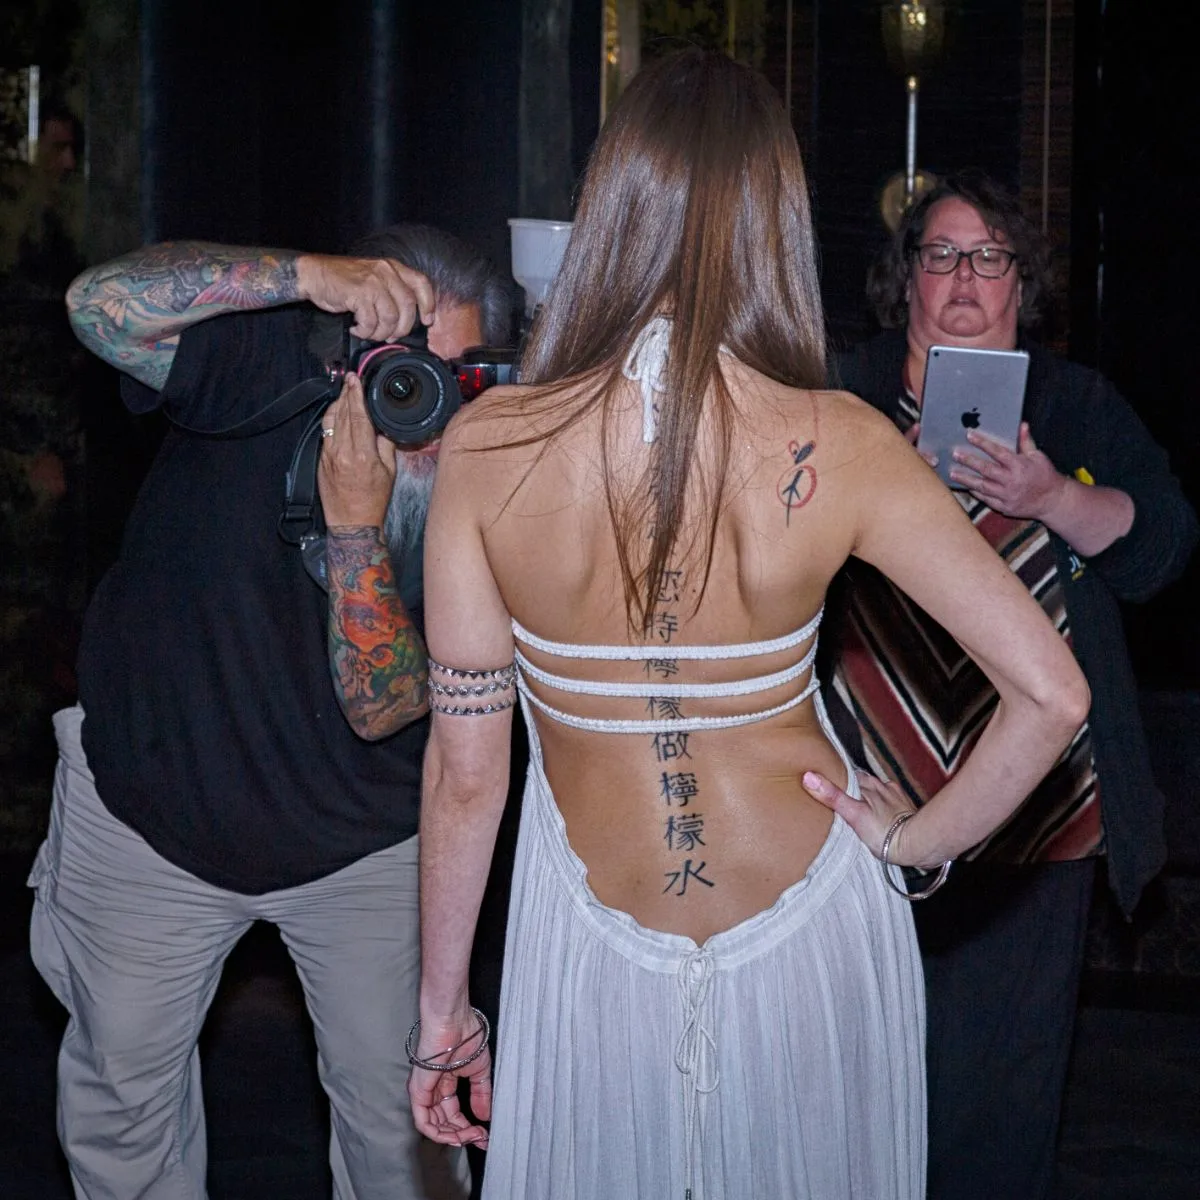 doug jefferis recommends Riley Reid Back Tattoo